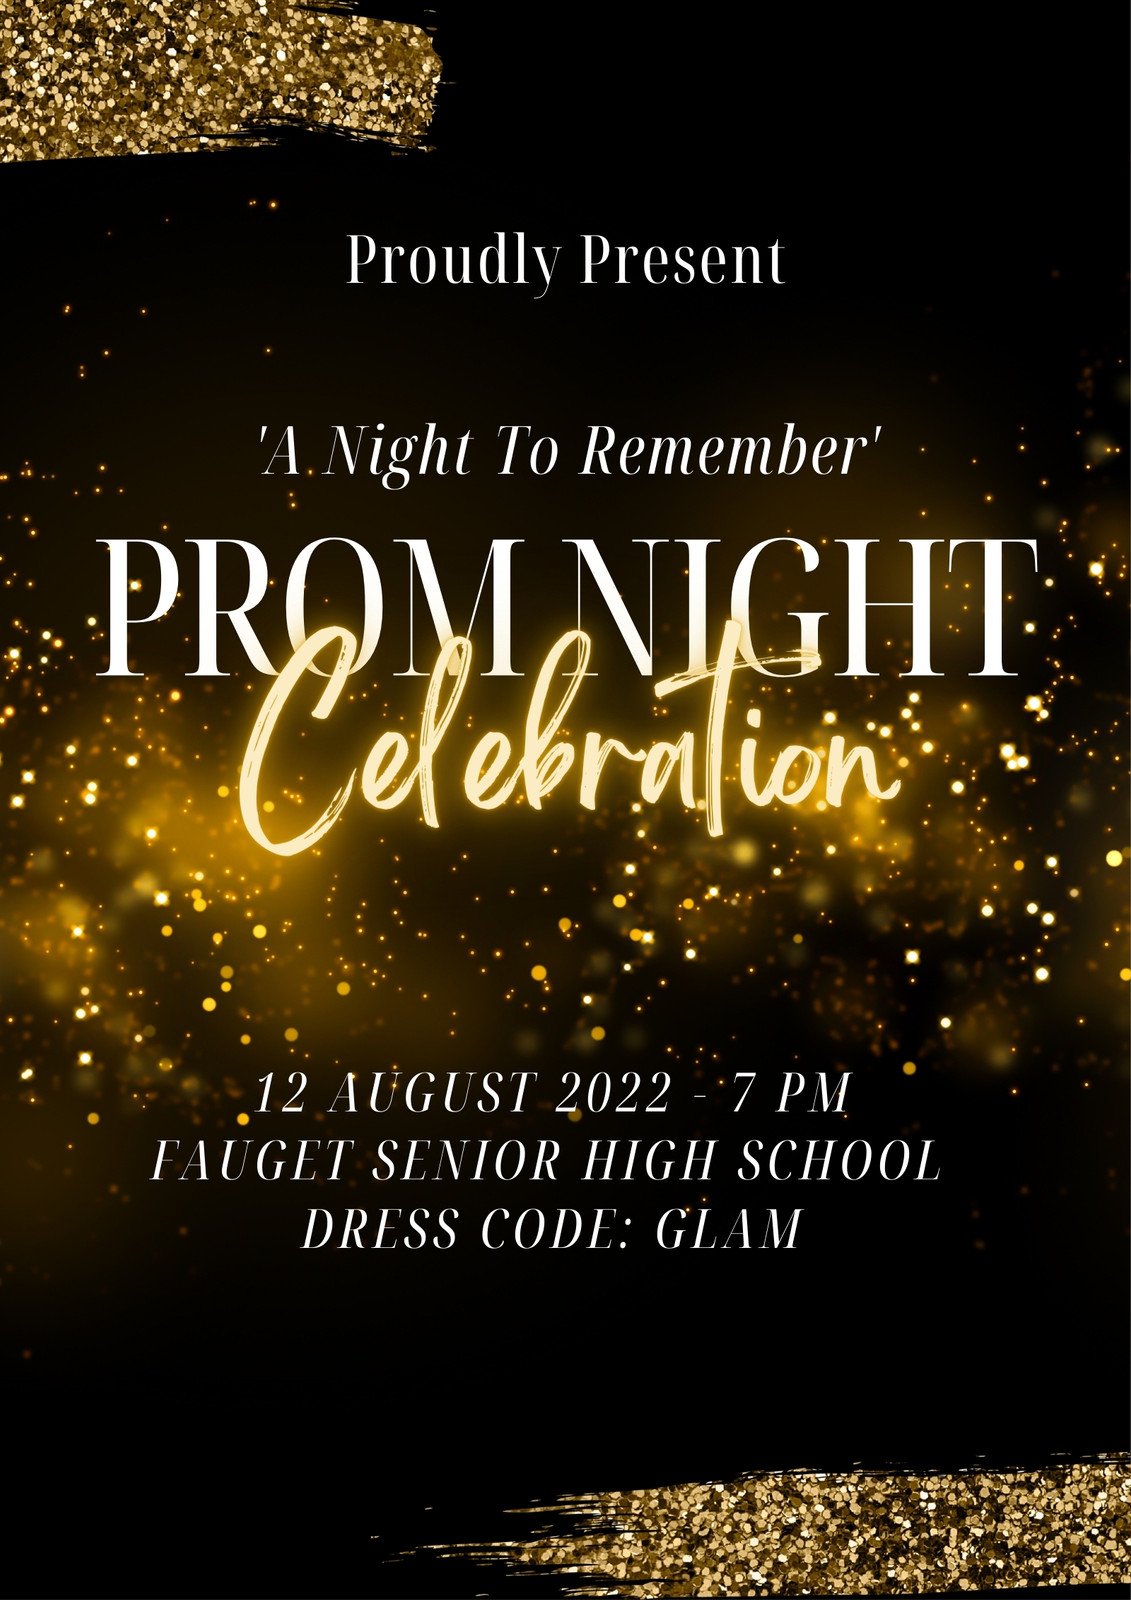 starry-night-event-invitations-prom-invitation-award-night-invite-event